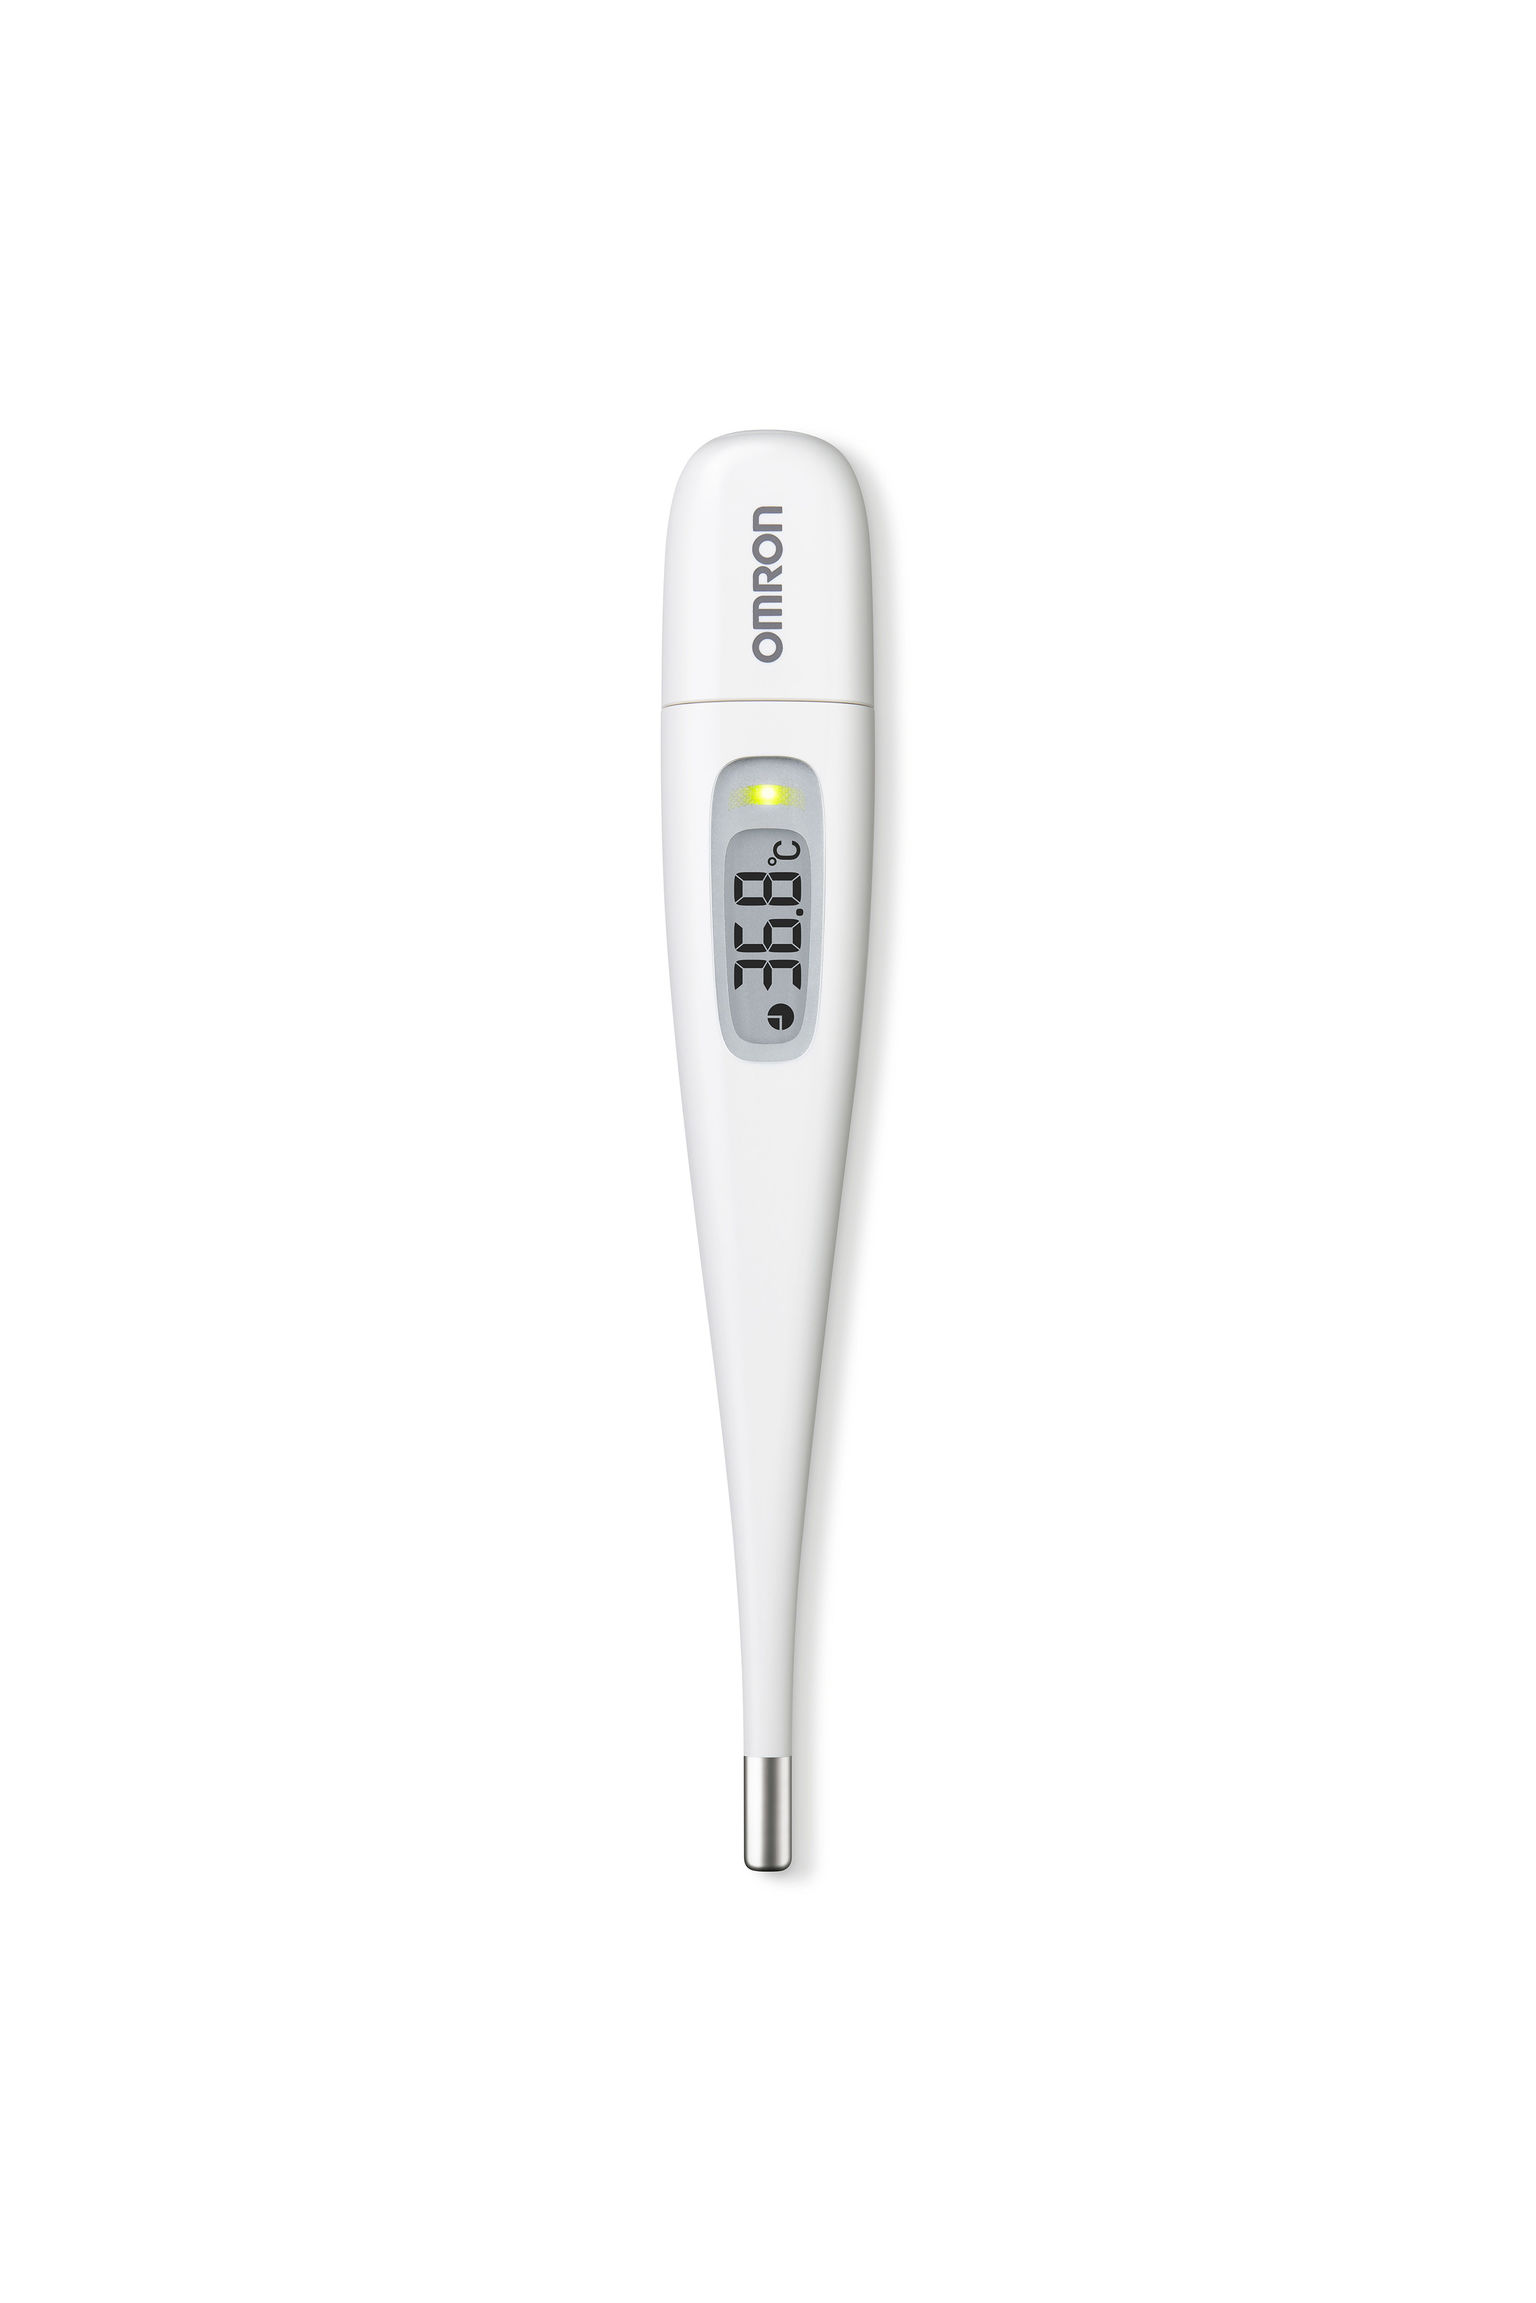 OMRON Digital Thermometer MC-6800B